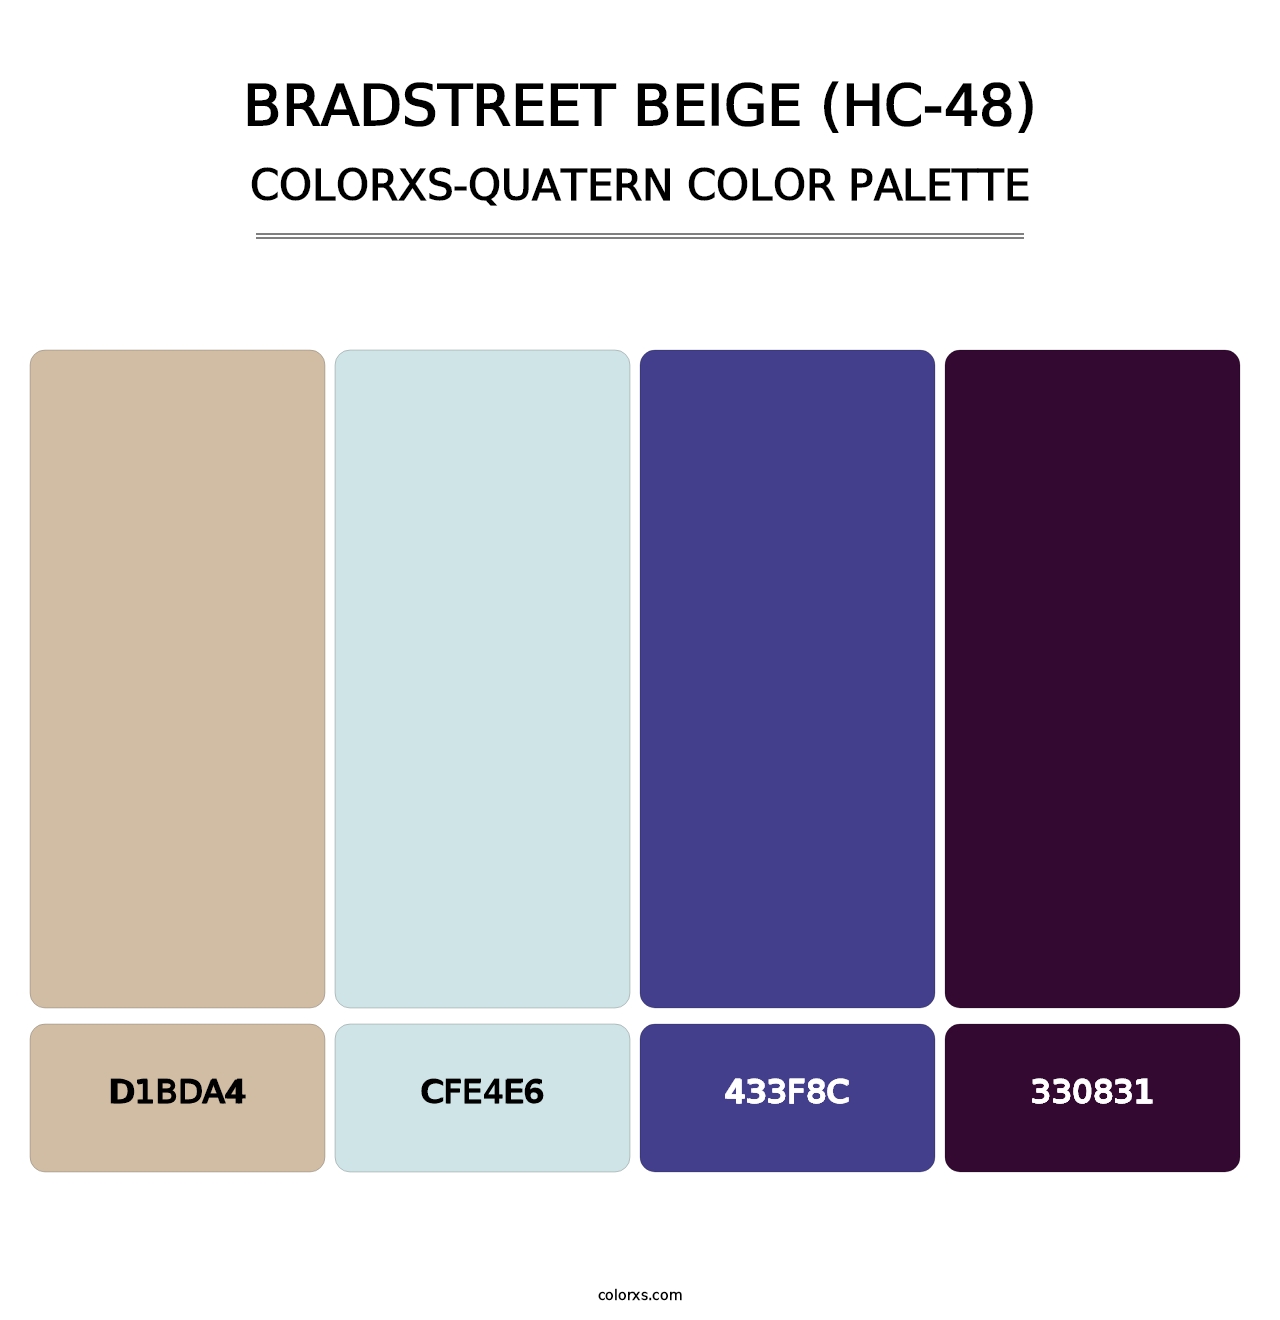 Bradstreet Beige (HC-48) - Colorxs Quatern Palette